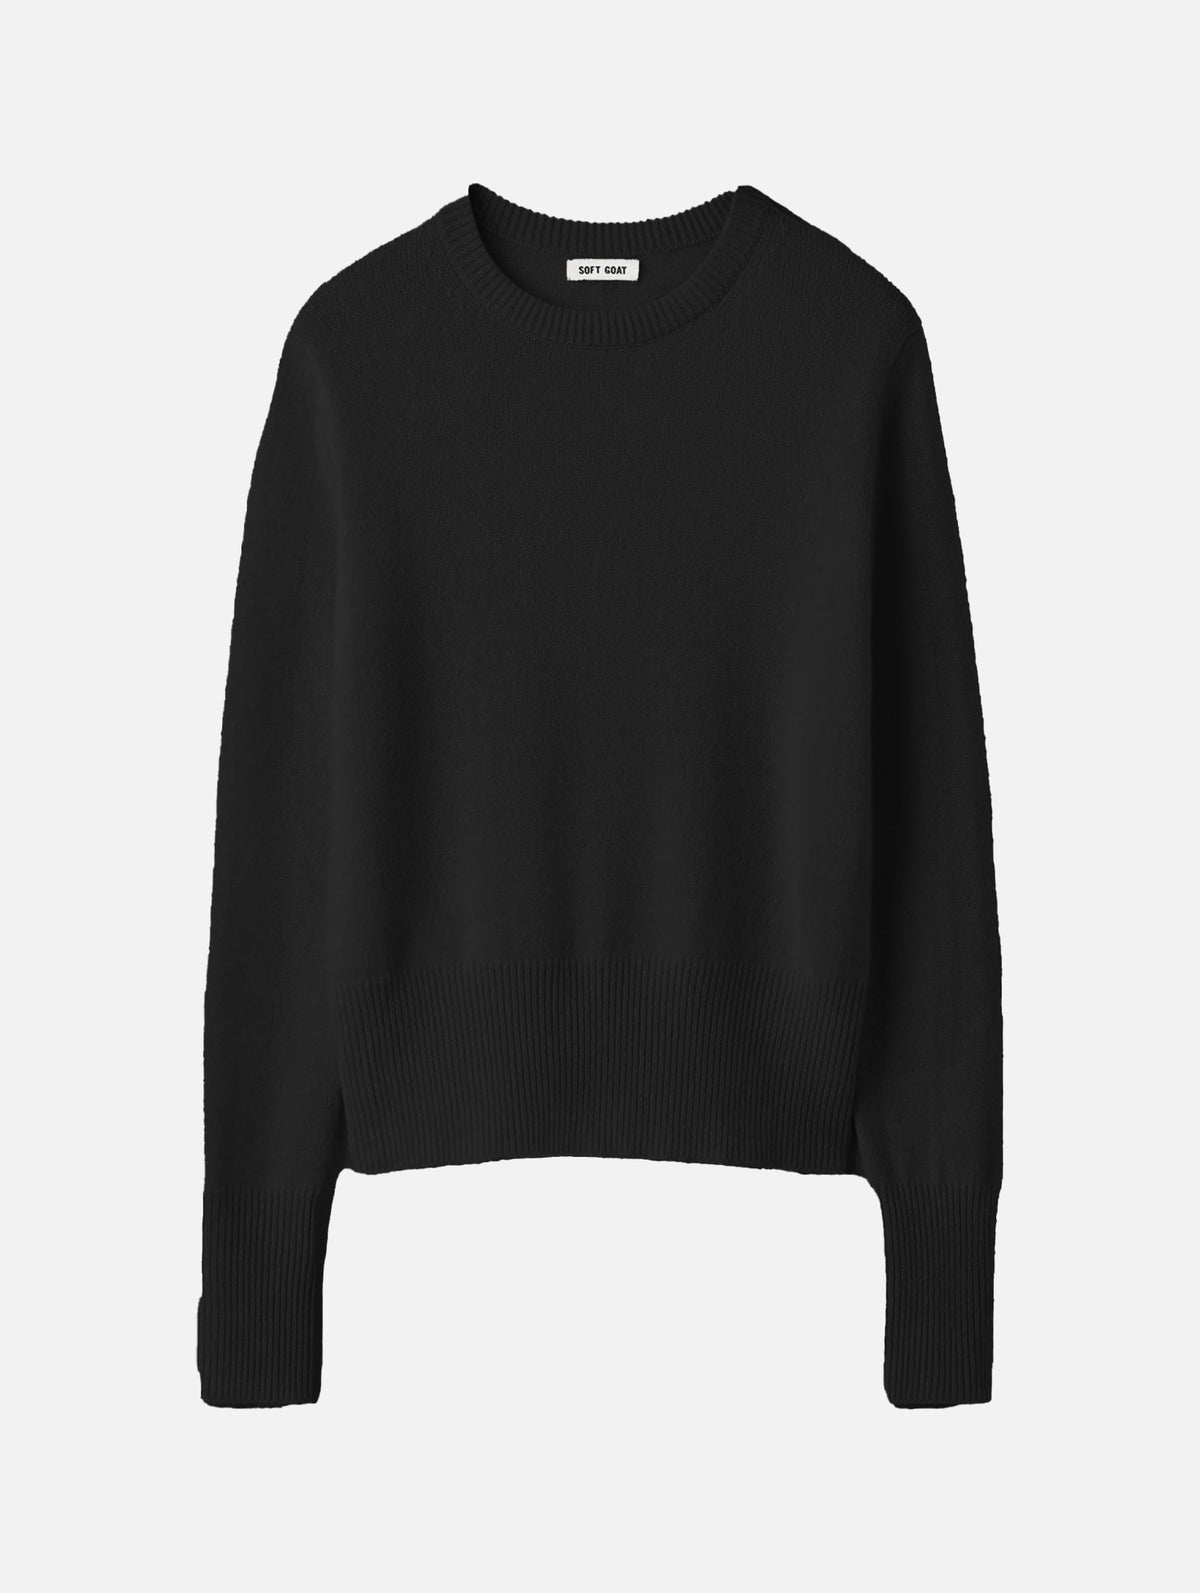 Classic O-Neck Cashmere Sweater in Black